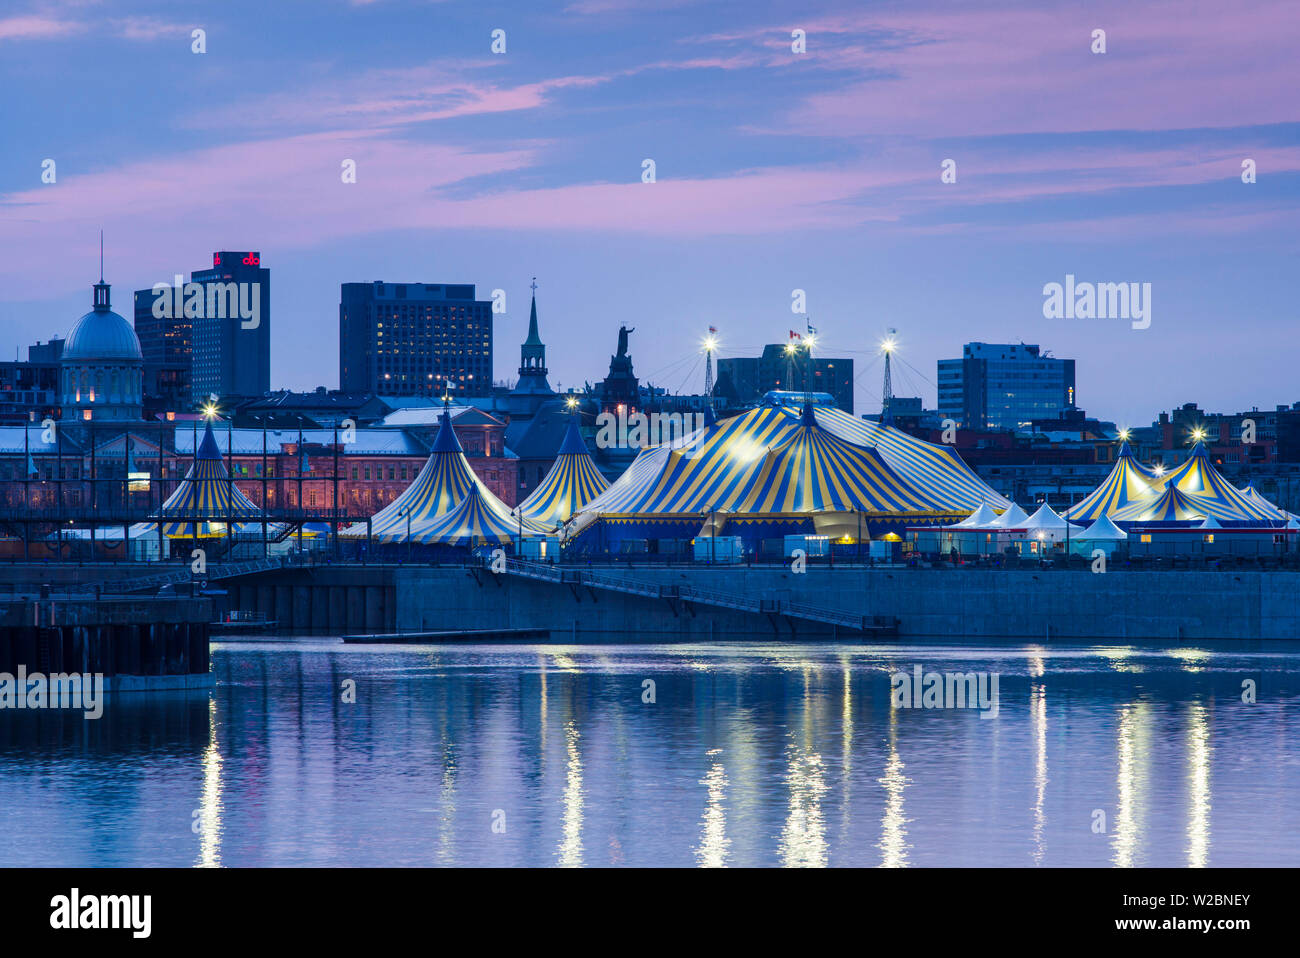 Kanada, Quebec, Montreal, Palais de Congres de Montreal, das Kongresszentrum, den alten Hafen und Zirkus Zelt vom St. Lawrence River Stockfoto